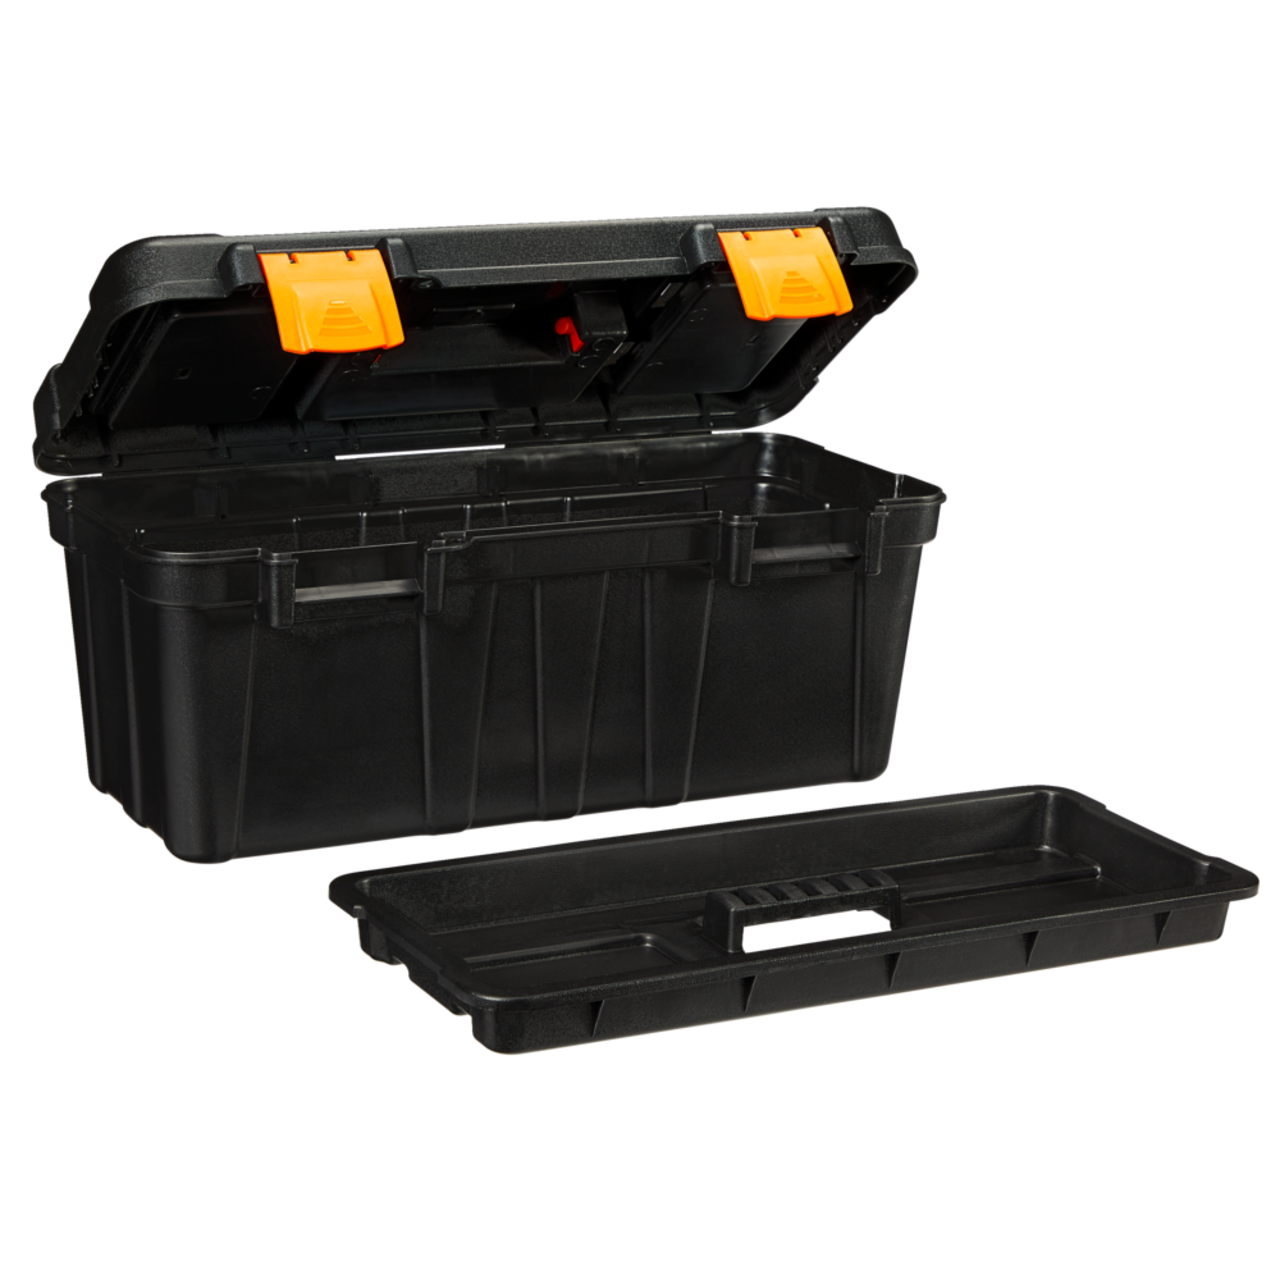 Anggrek Waterproof 10 Grids Tackle Box Organizer, Plastic Tackle Box, For Storing Fishing Tools Assorting Different Baits/Lures